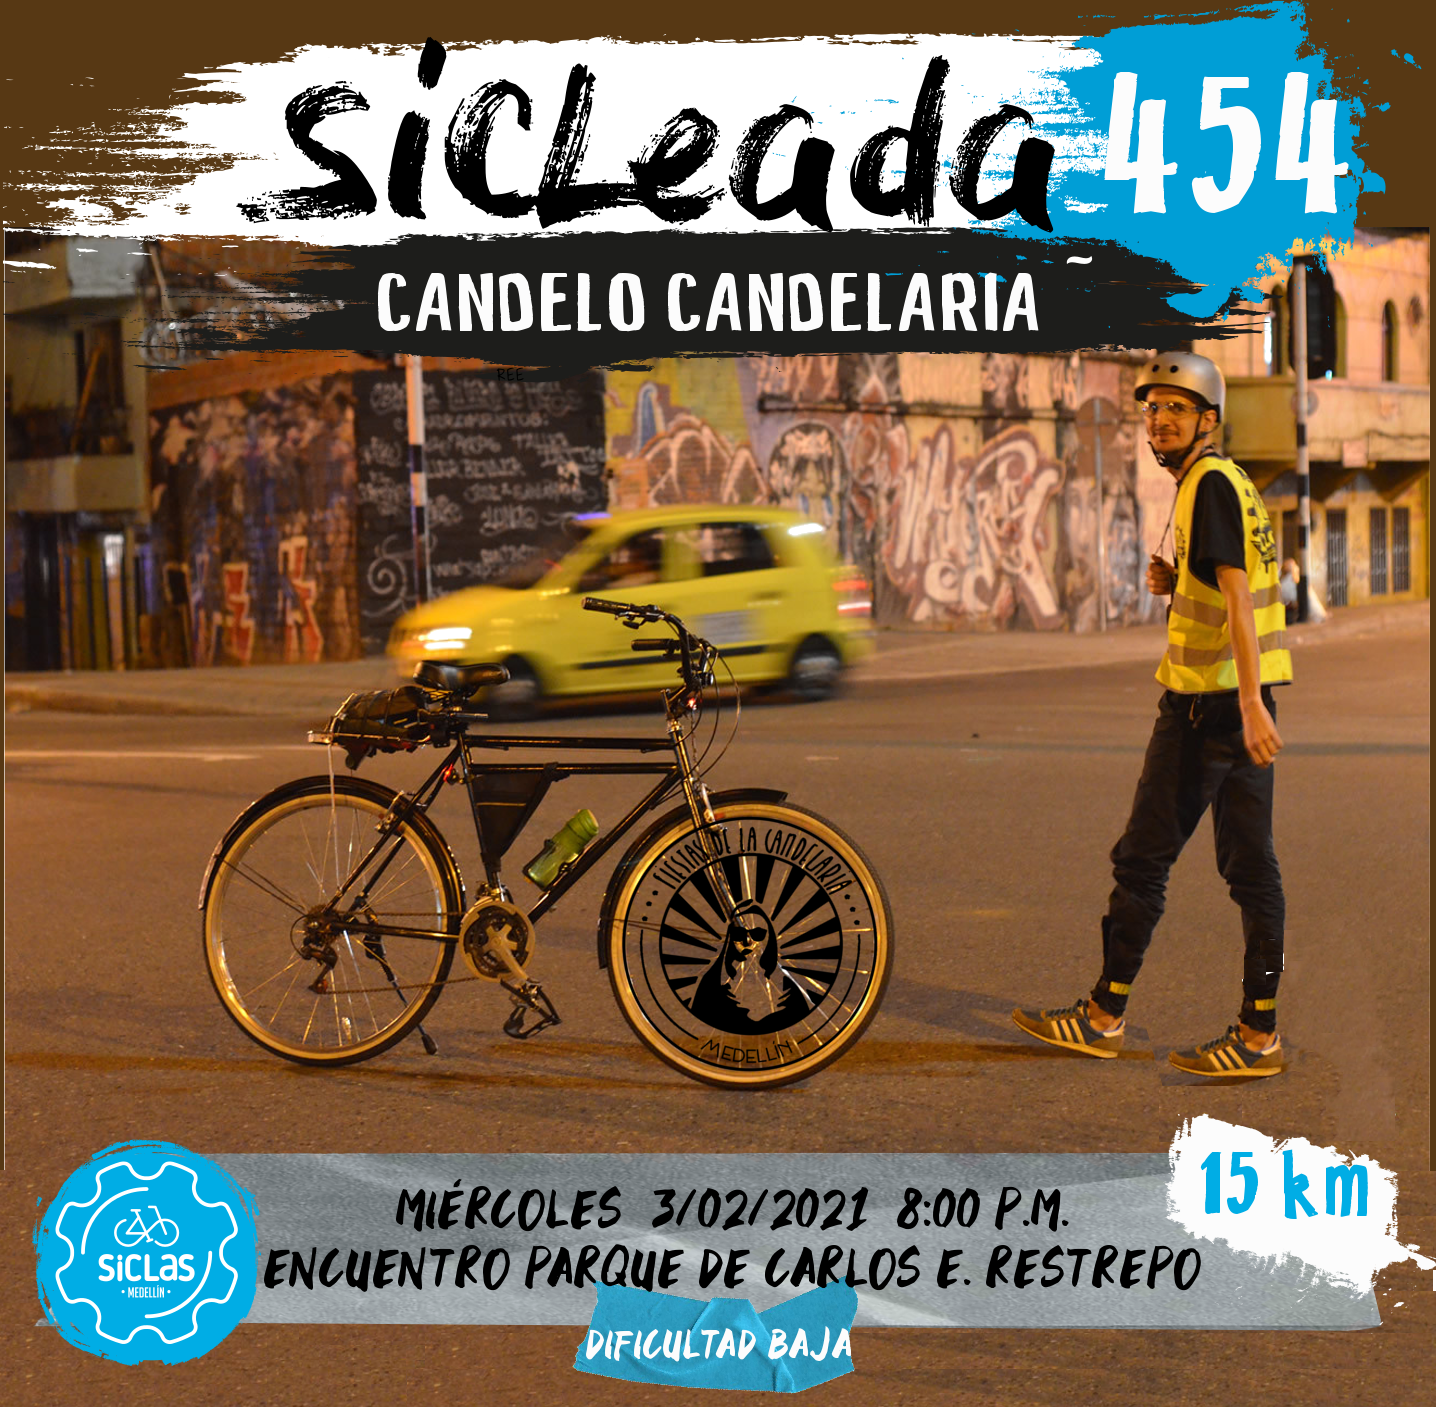 SiCLeada 454 Candelo Candelaria